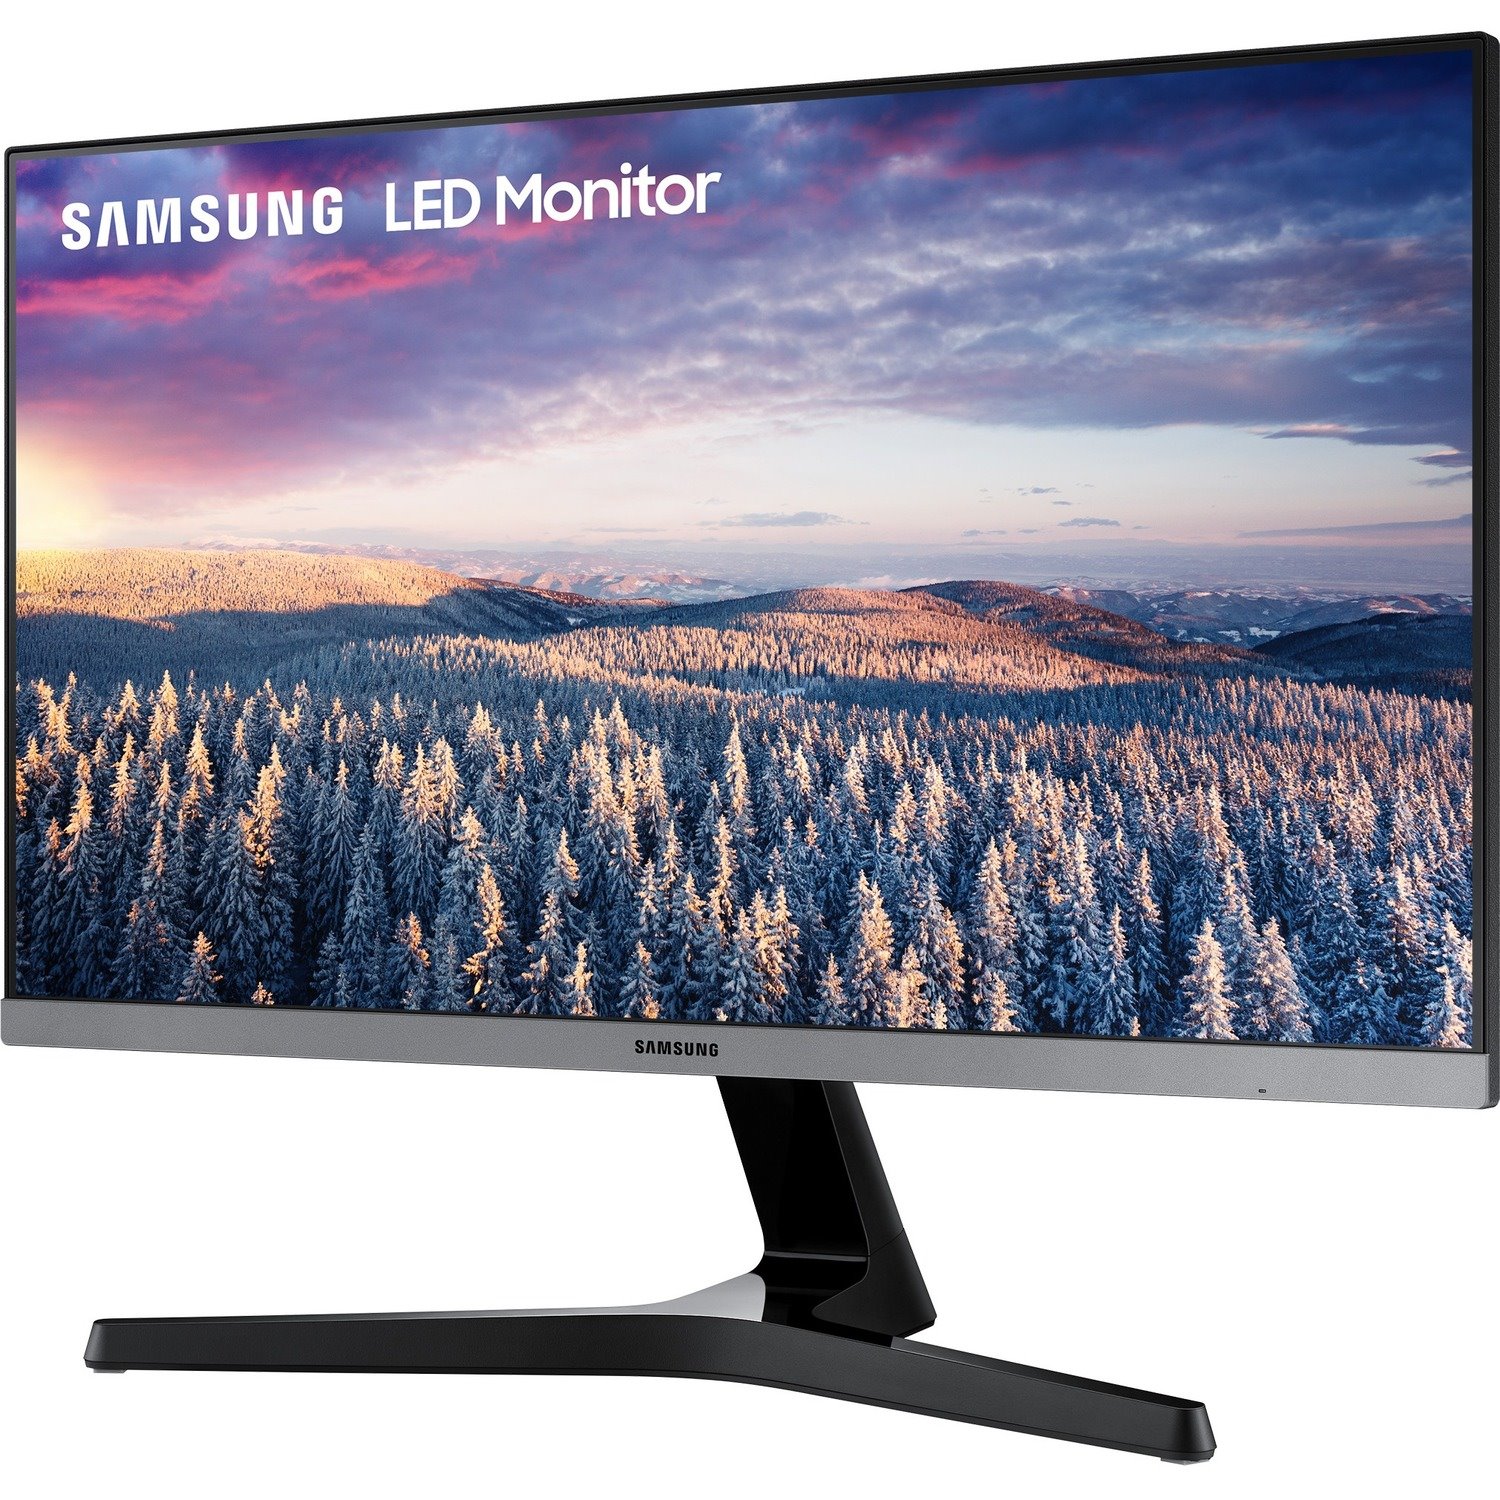 Samsung S24R350FZE 23.8" Full HD LED LCD Monitor - 16:9 - Dark Blue Gray